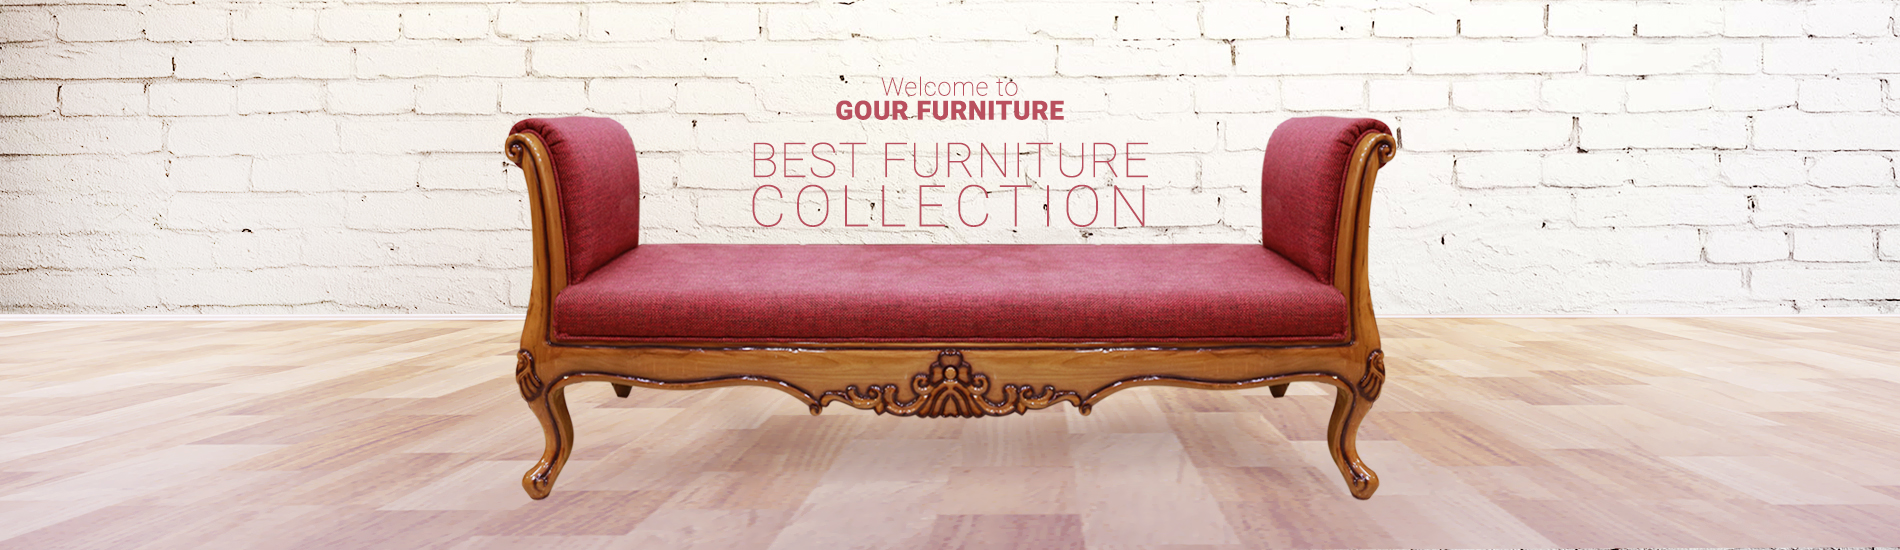 gour furniture house